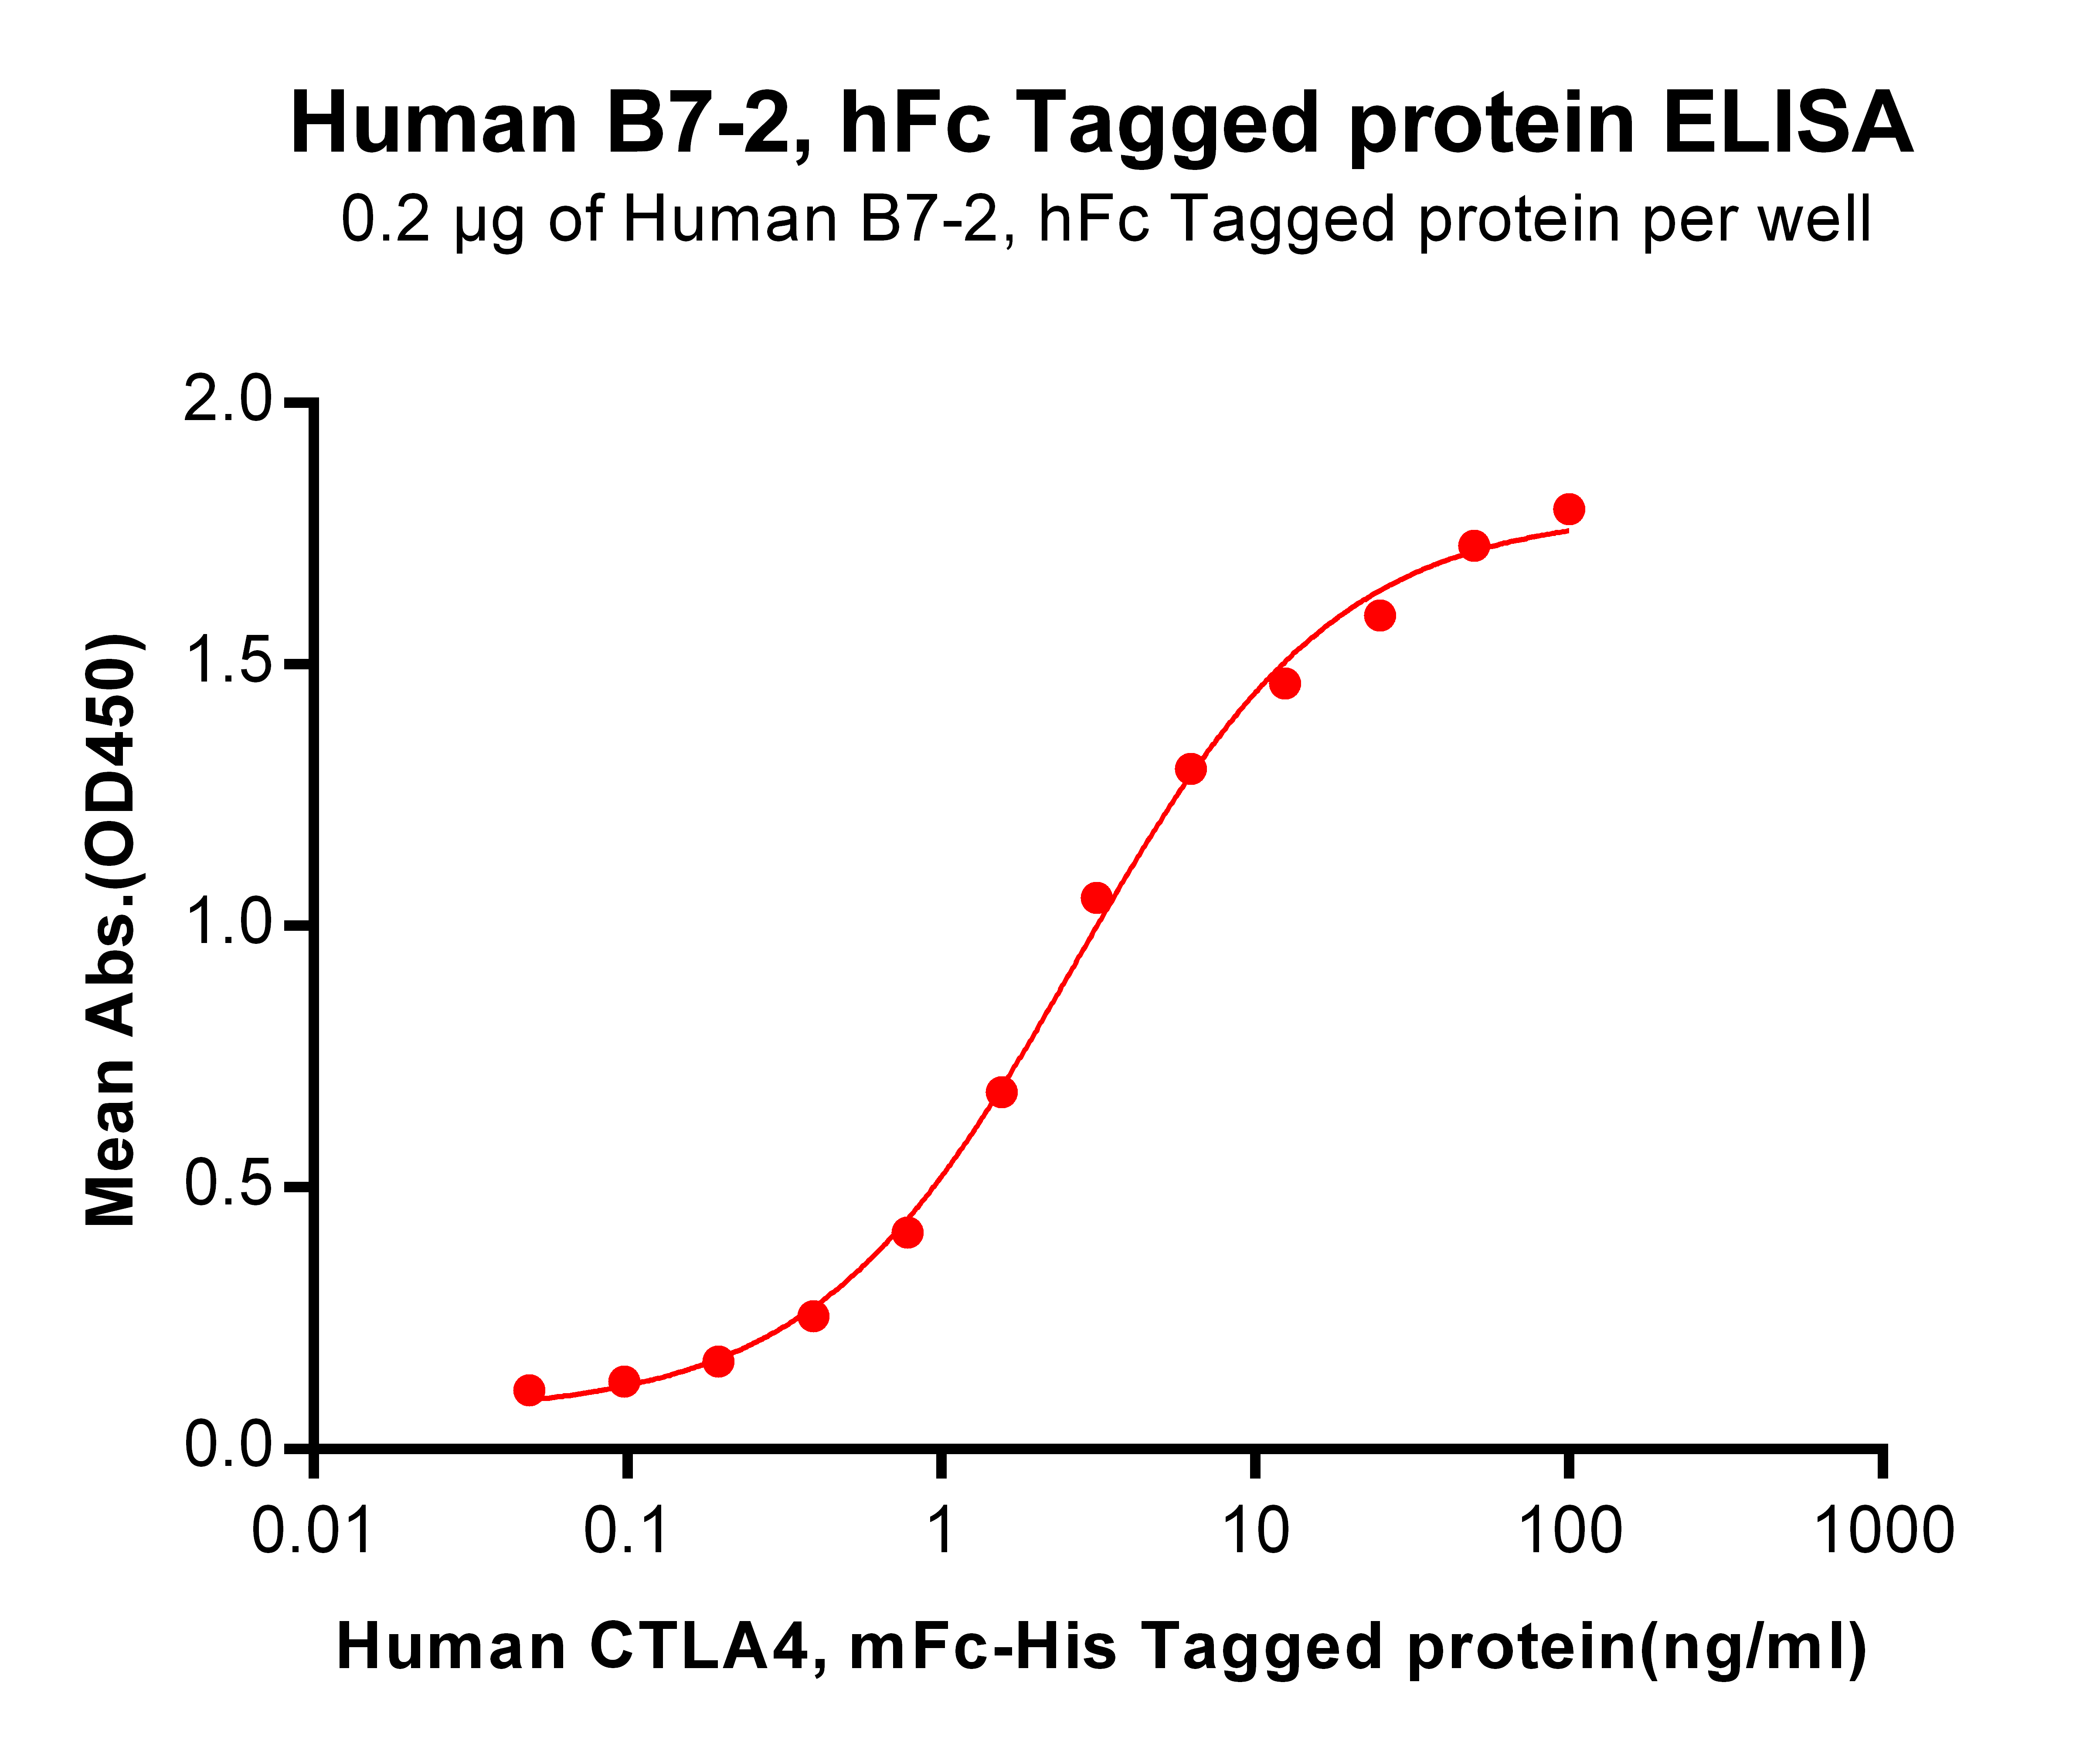 Human B7-2 Protein, hFc Tag